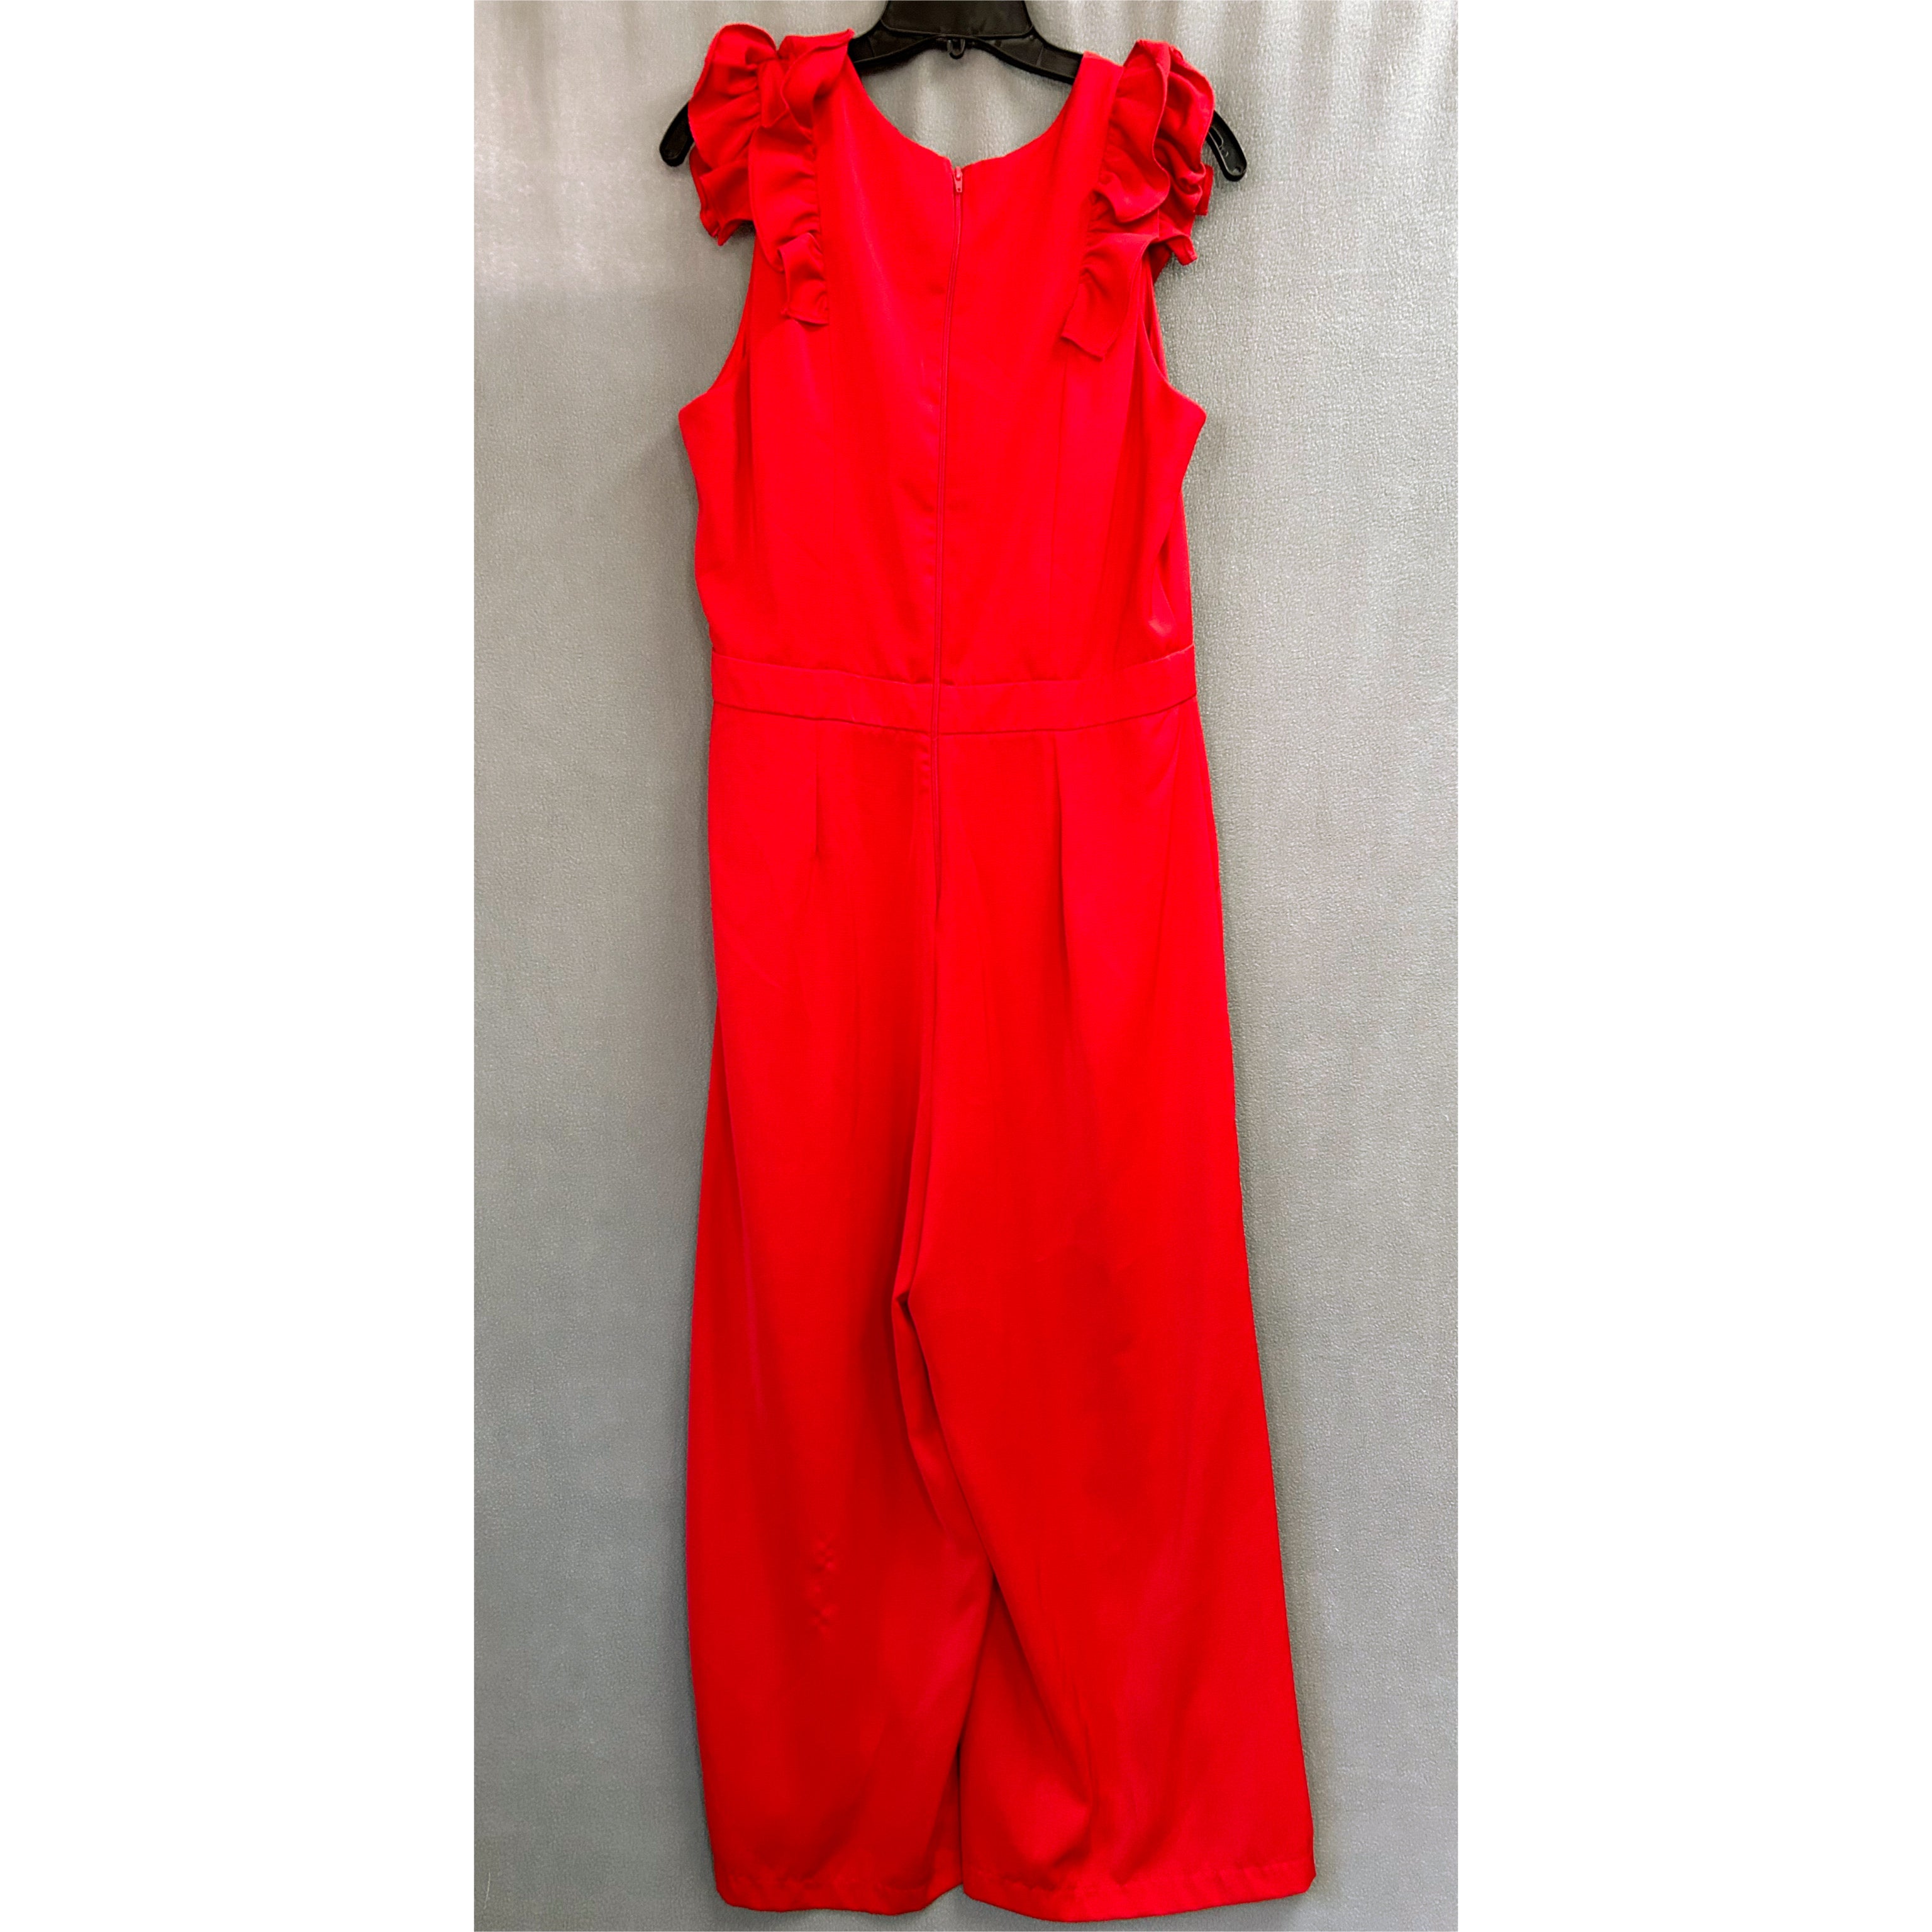 Gianni Bini red jumpsuit, size XL